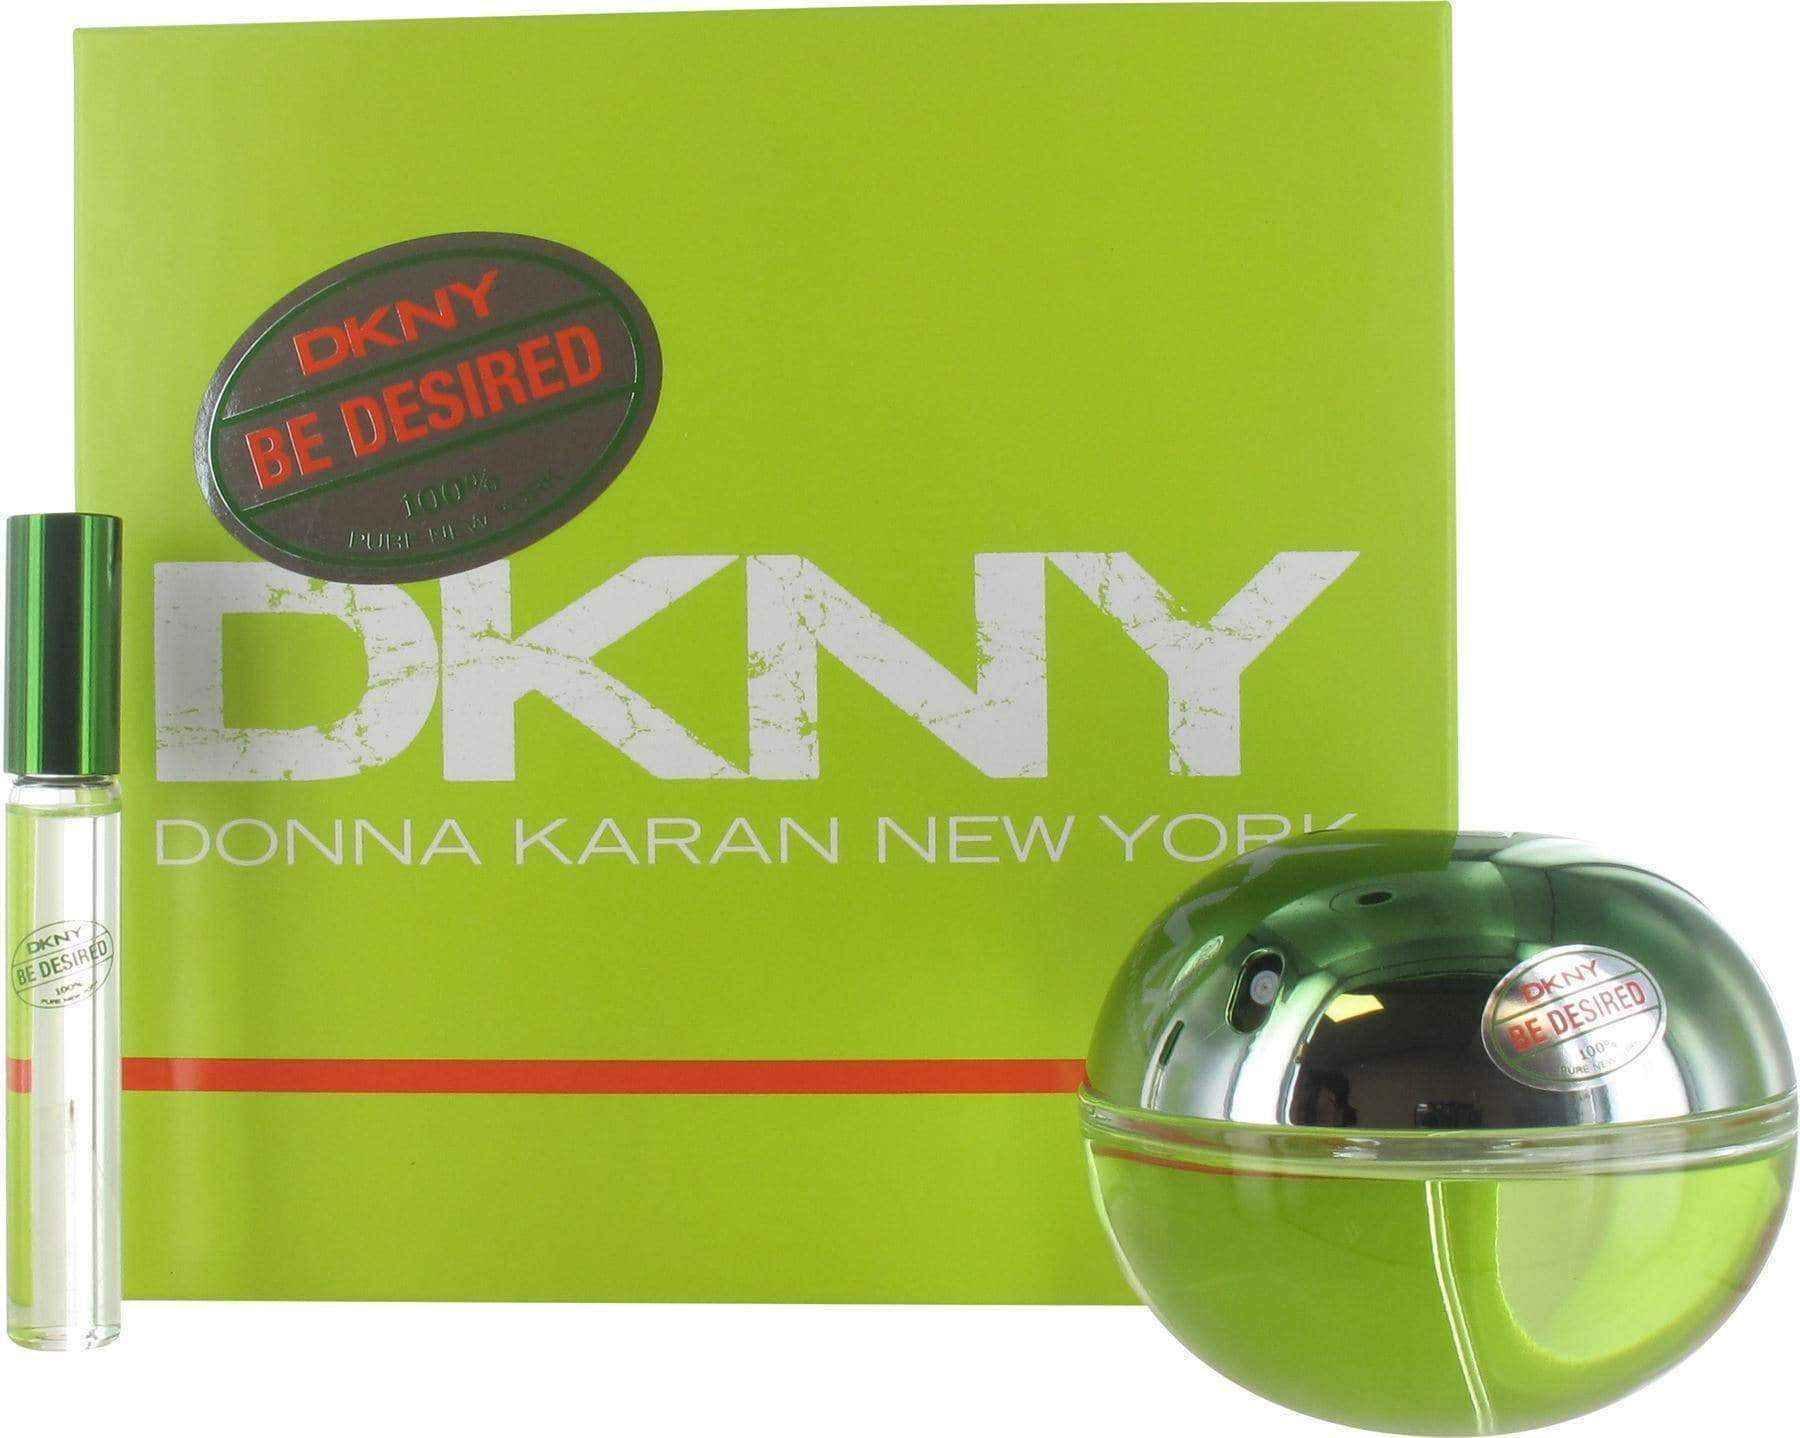 DKNY Be Desired Eau de Parfum 100ml Spray UK